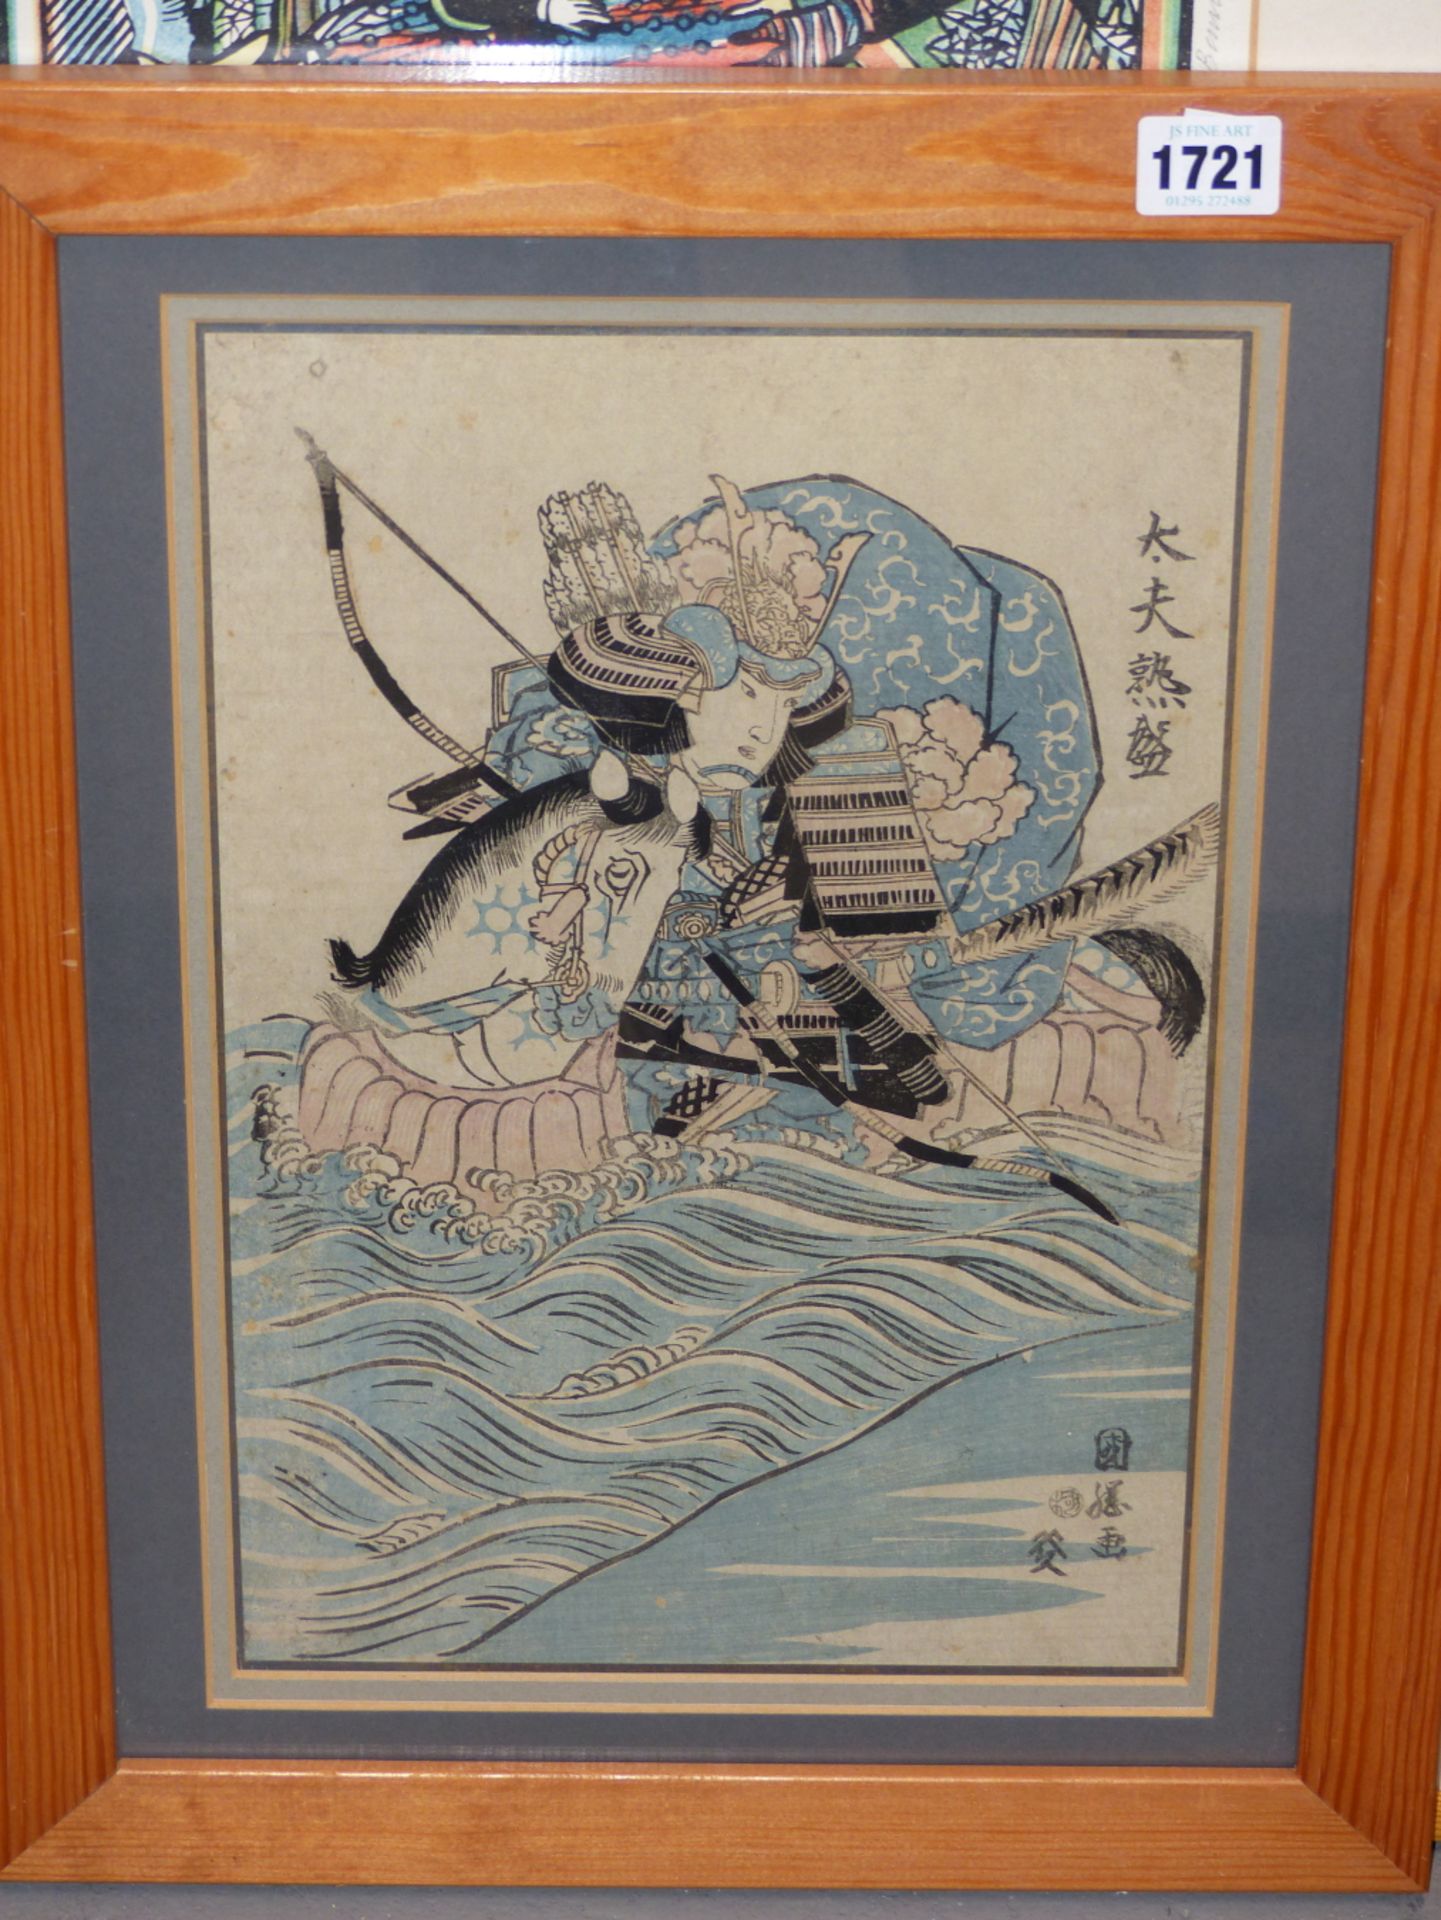 UTAGAWA KUNIKIYO, JAPANESE 1850-1887. SAMURAI IN FULL BATTLE DRESS RIDING HORSE IN THE SURF. - Image 2 of 3